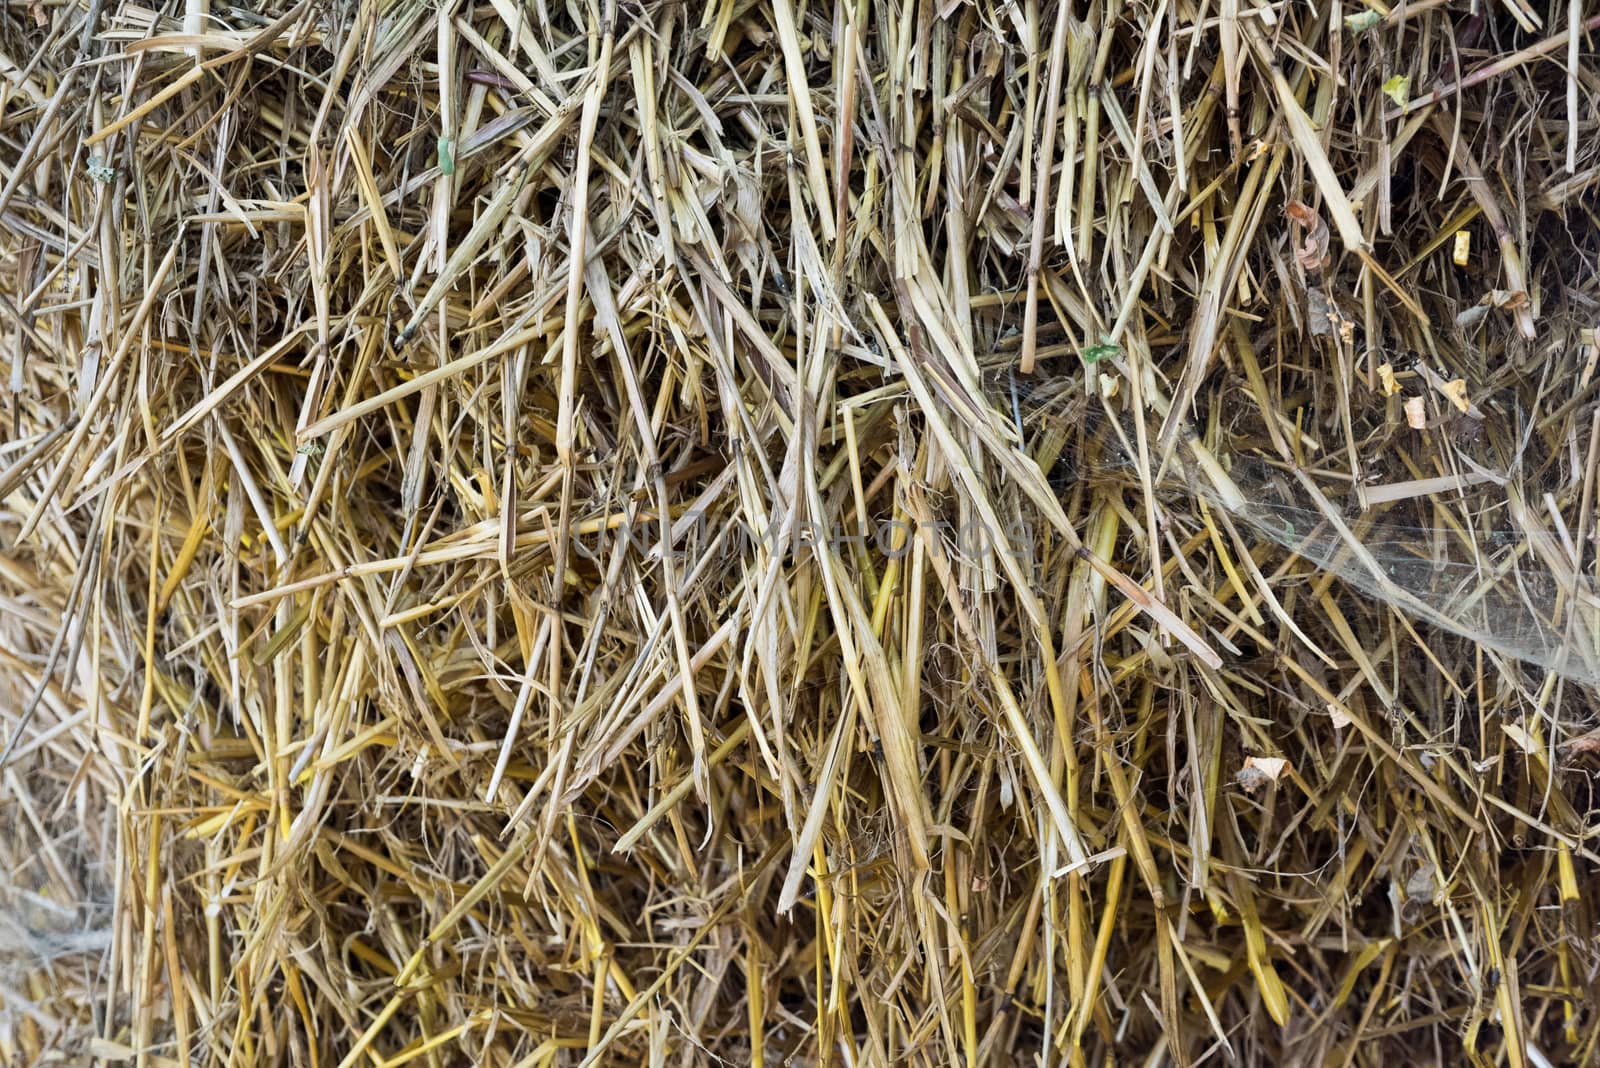 Round bale of straw close-up

